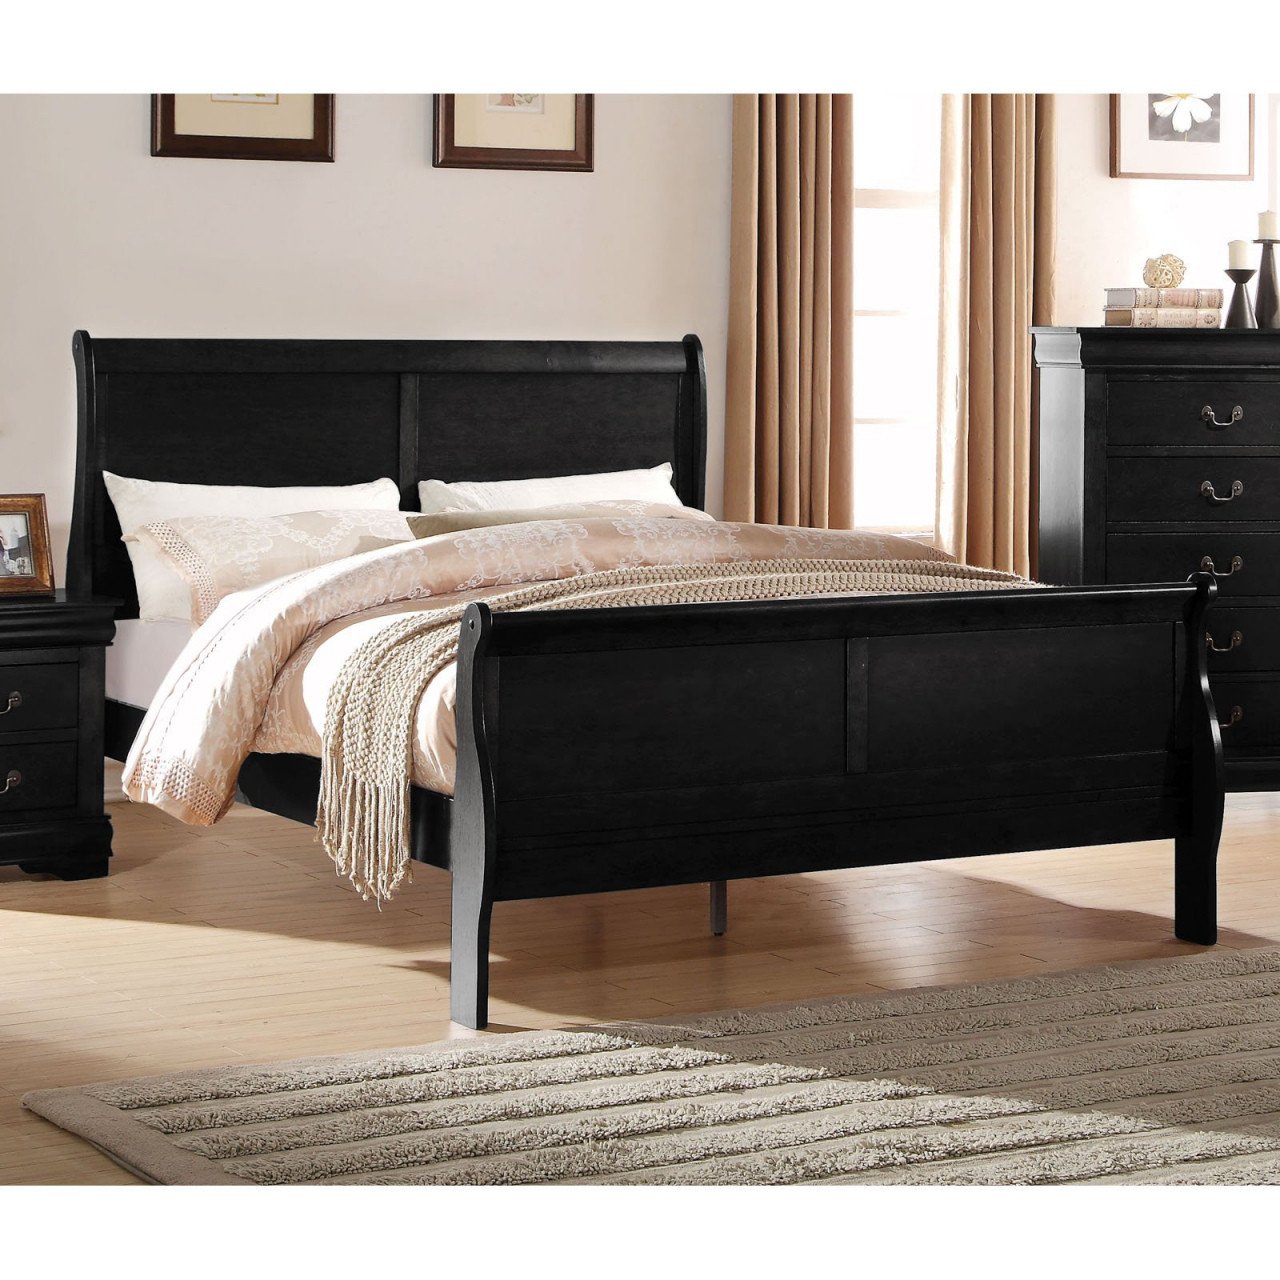 Log King Size Bedroom Set Inspirational King Size Bed Frame with Drawers — Procura Home Blog